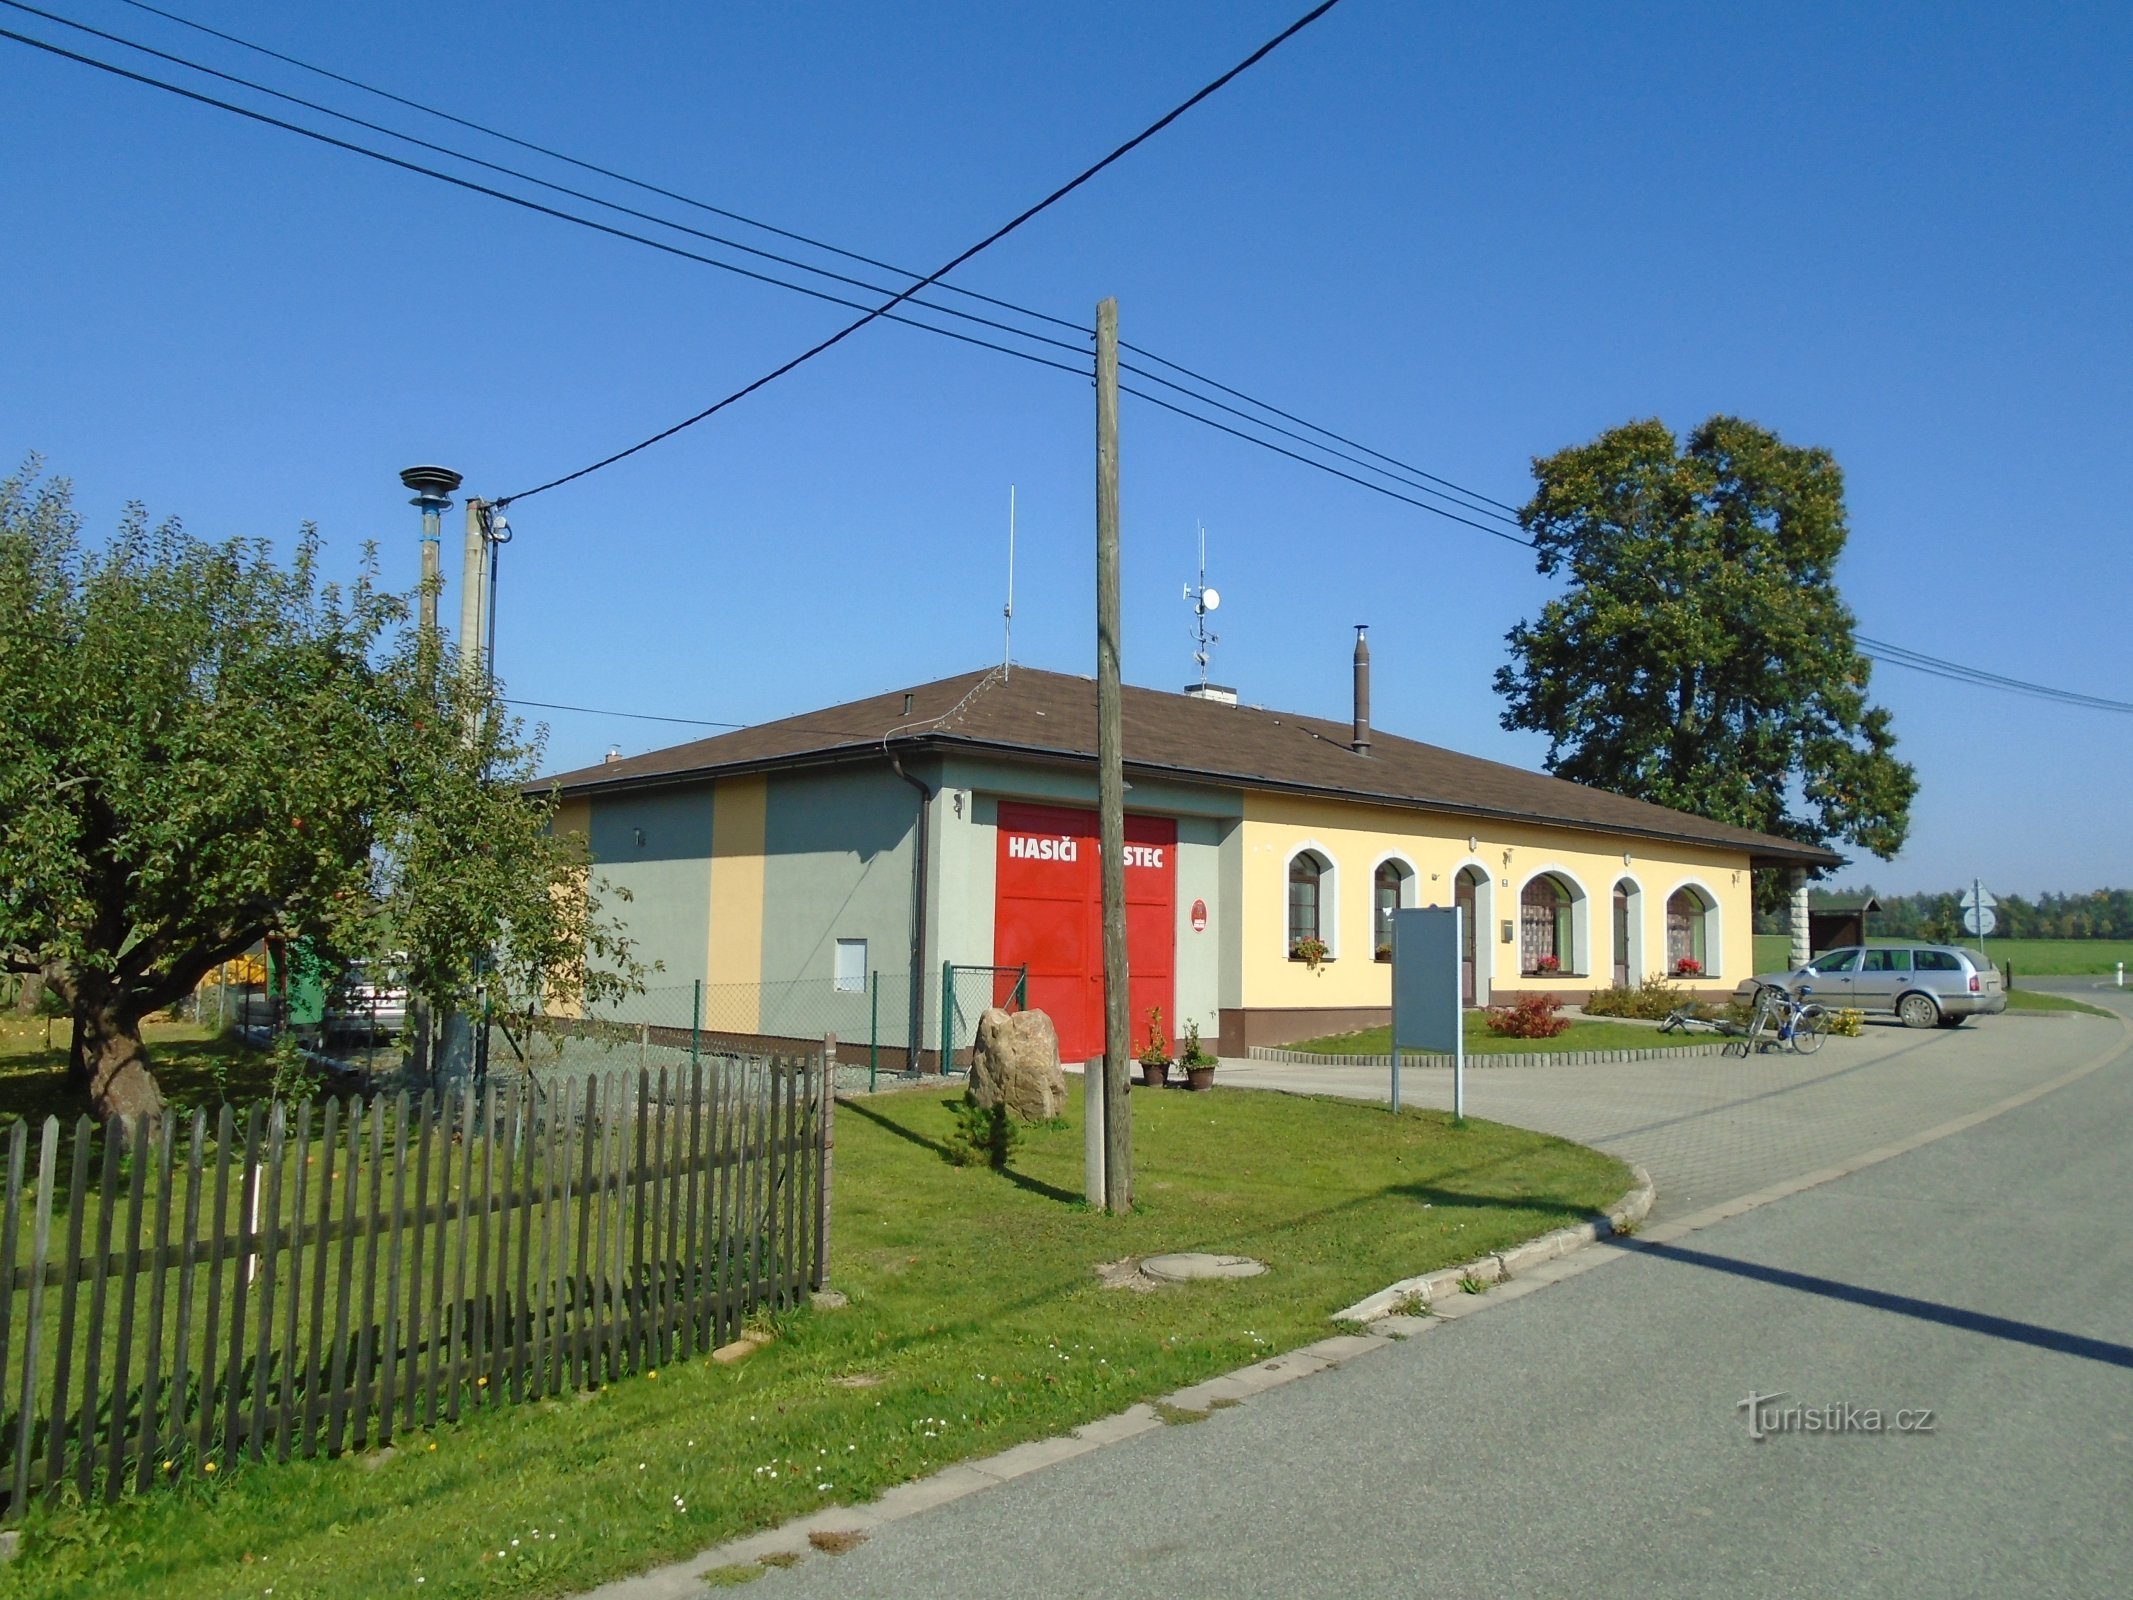 Kommunekontor (Vestec)